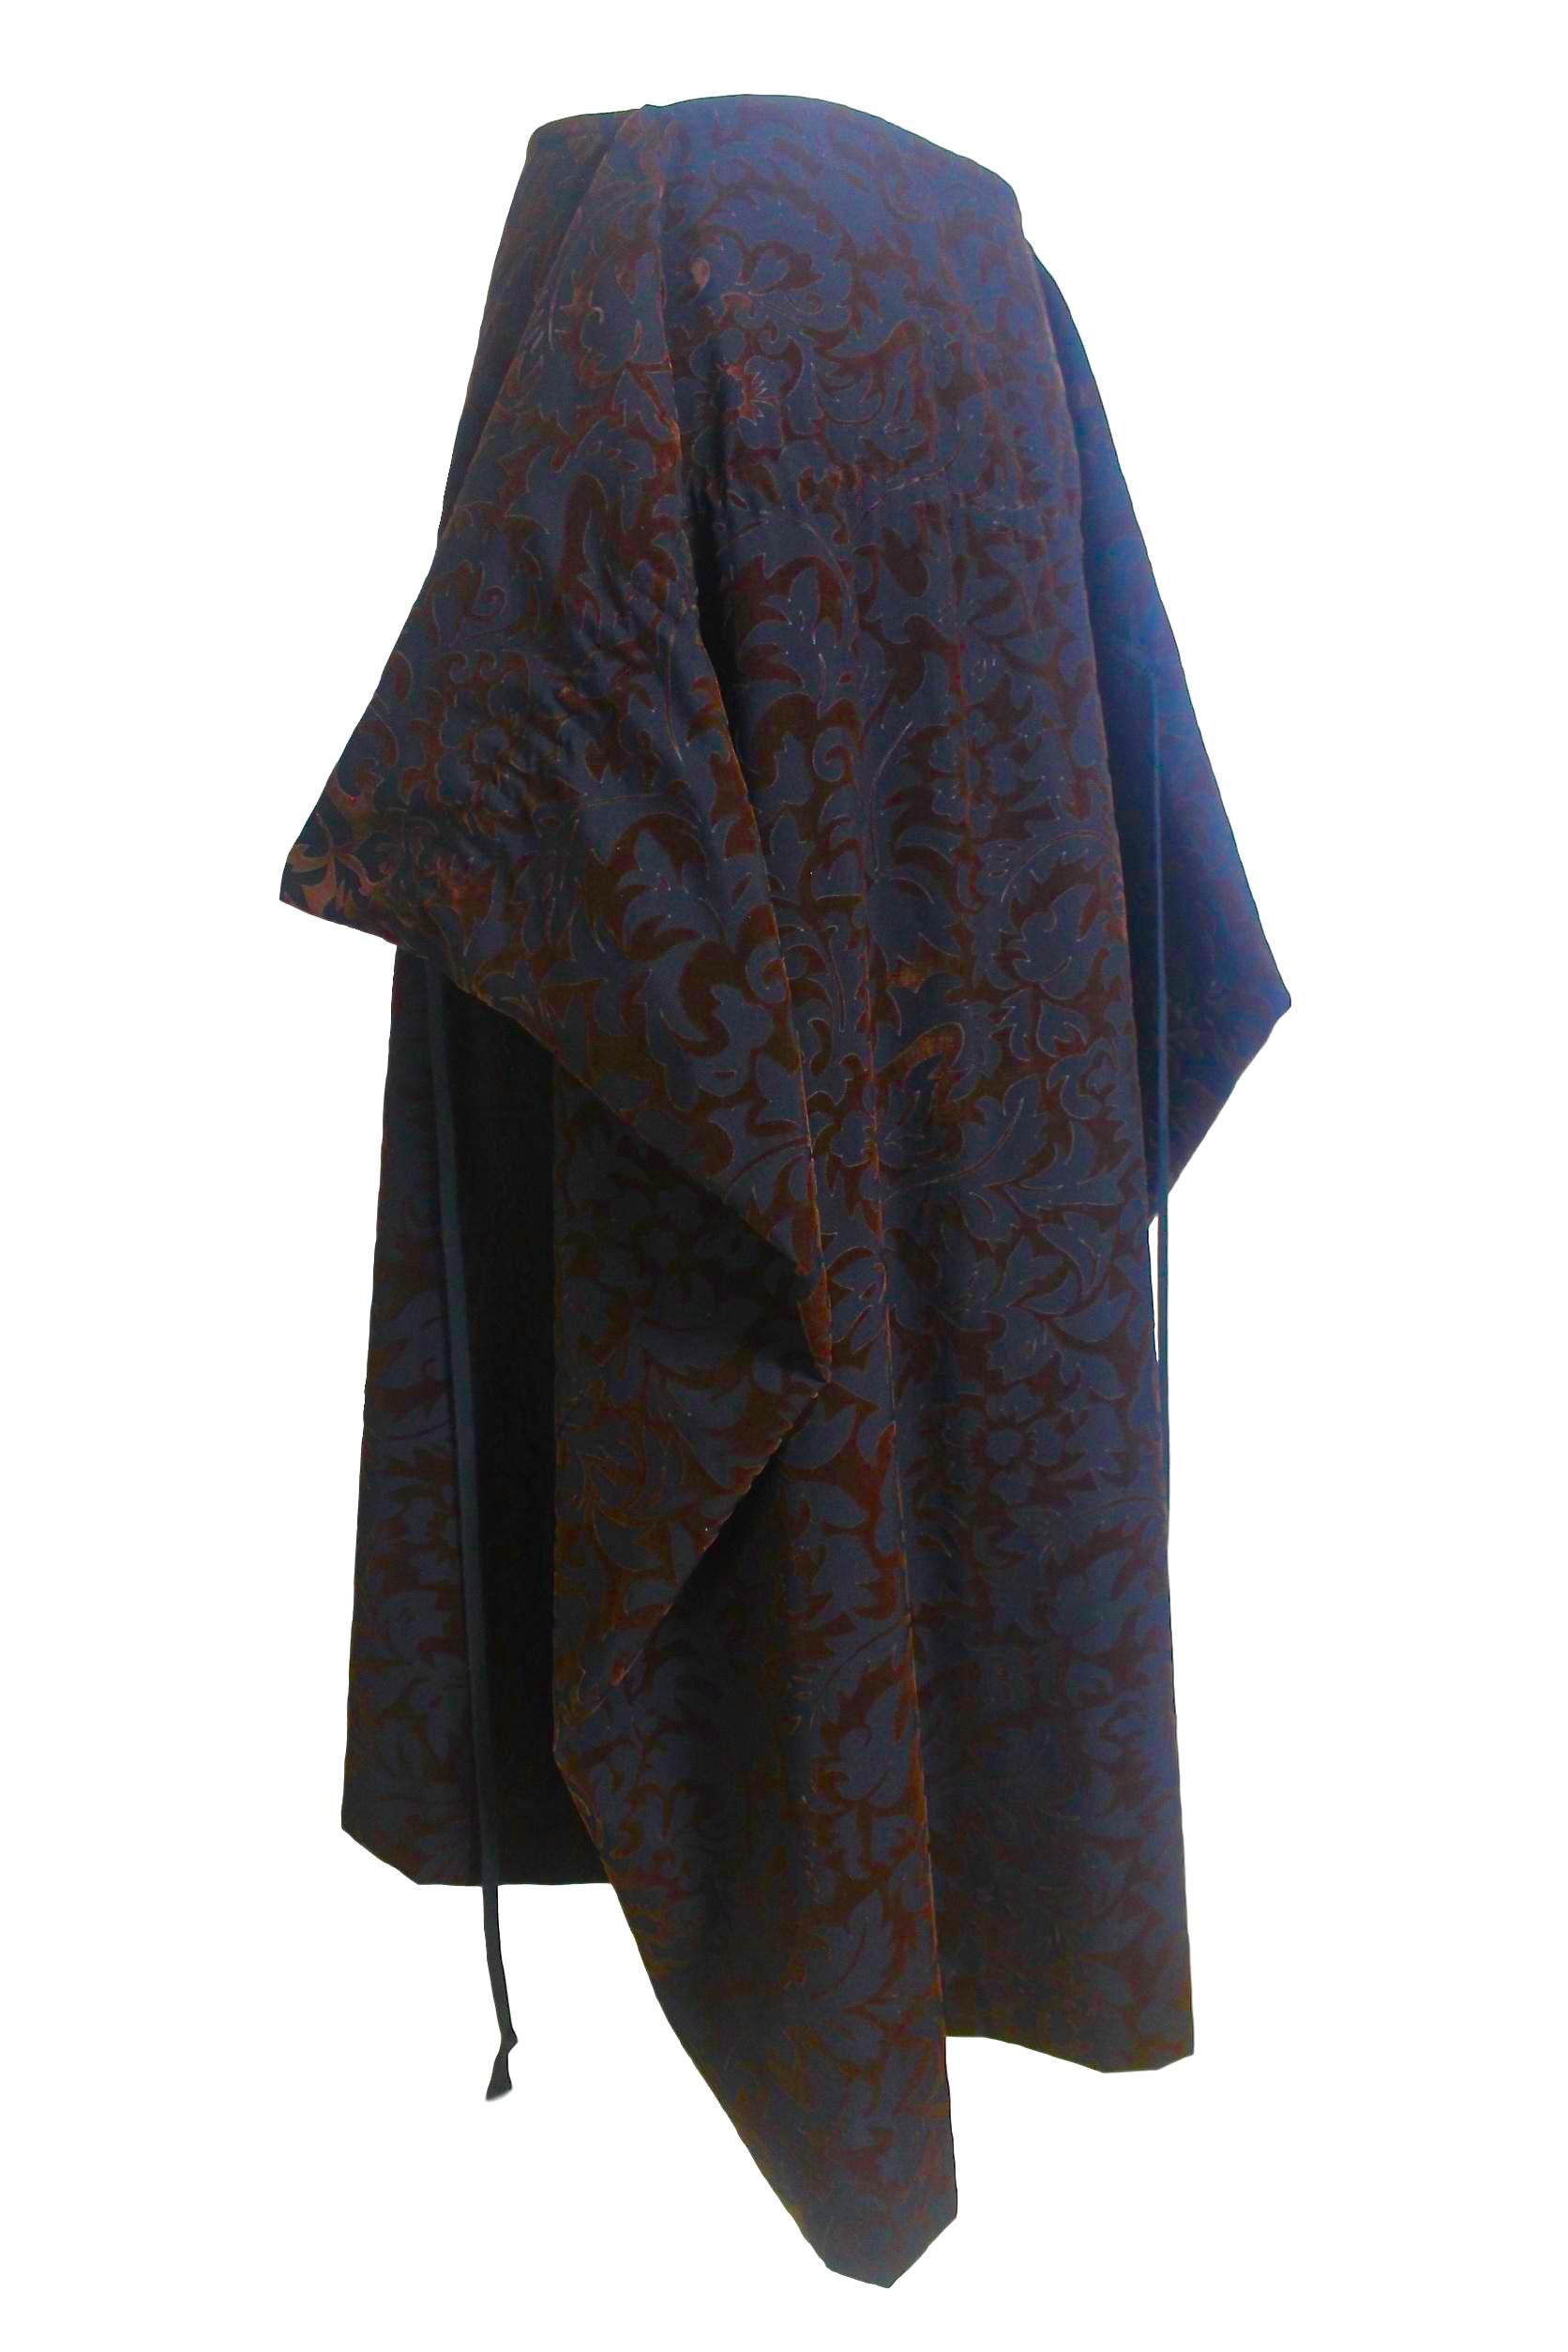 Comme des Garcons Flat Envelope Wool Skirt AD 1996 For Sale 4